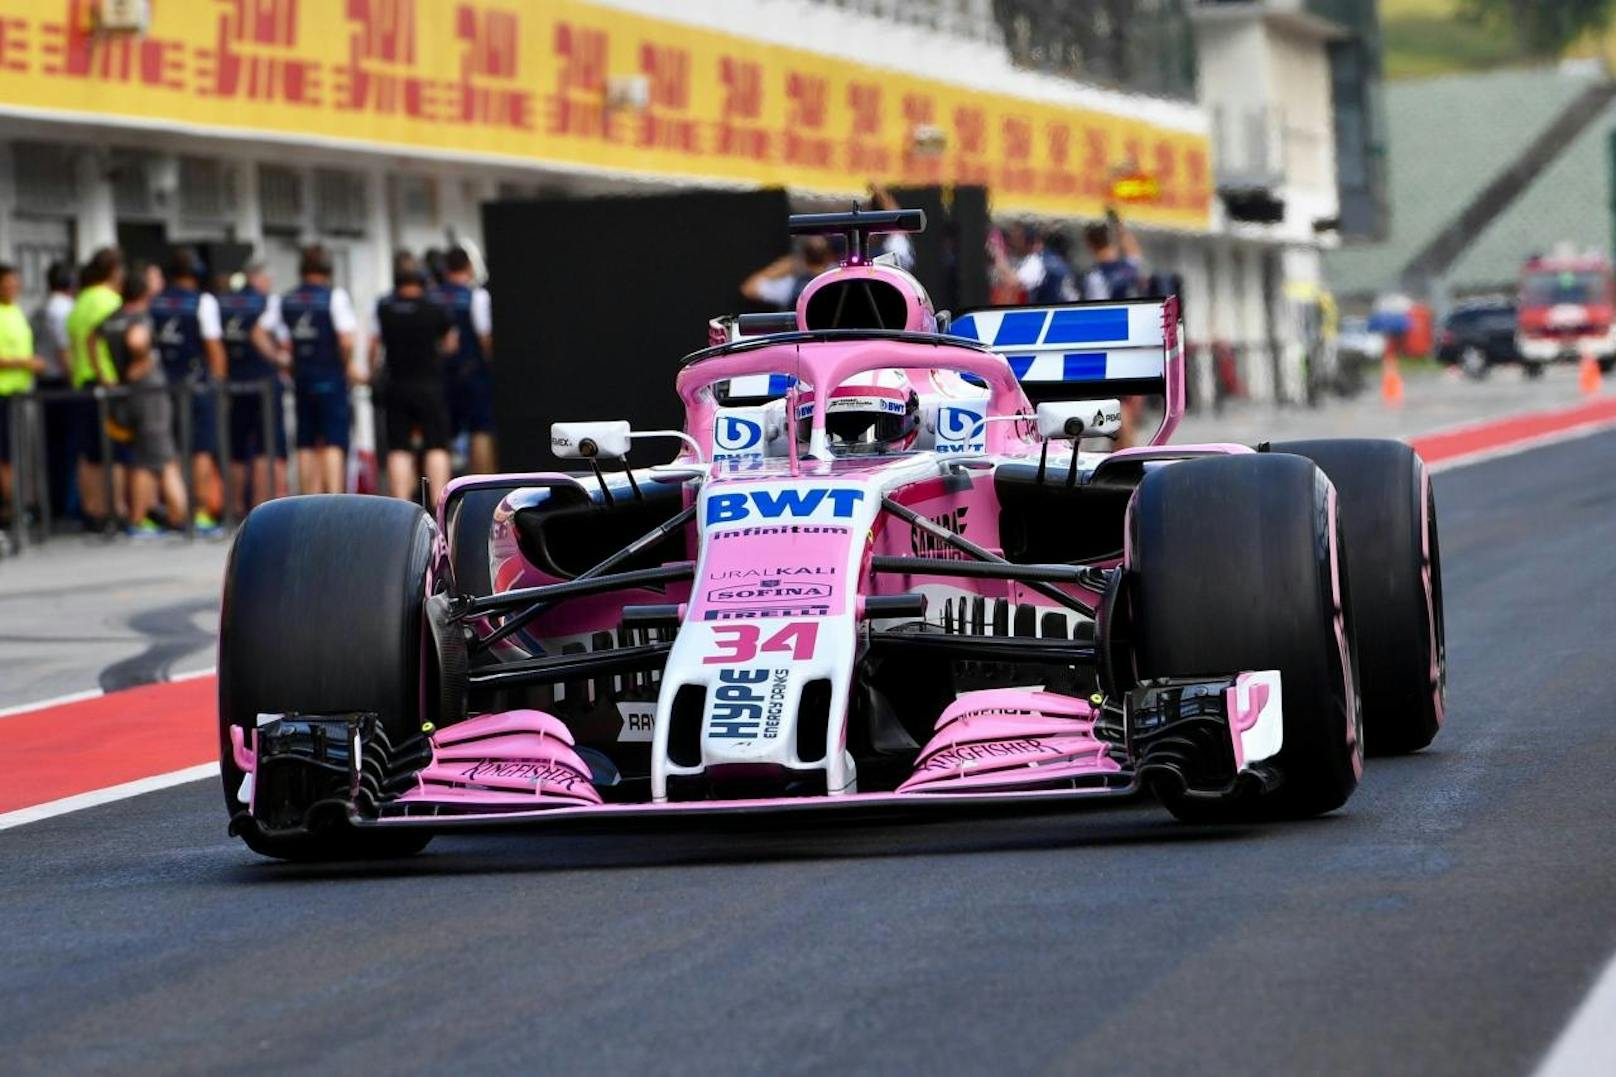 <b>Platz 6
</b>Force India: 59 Millionen Euro